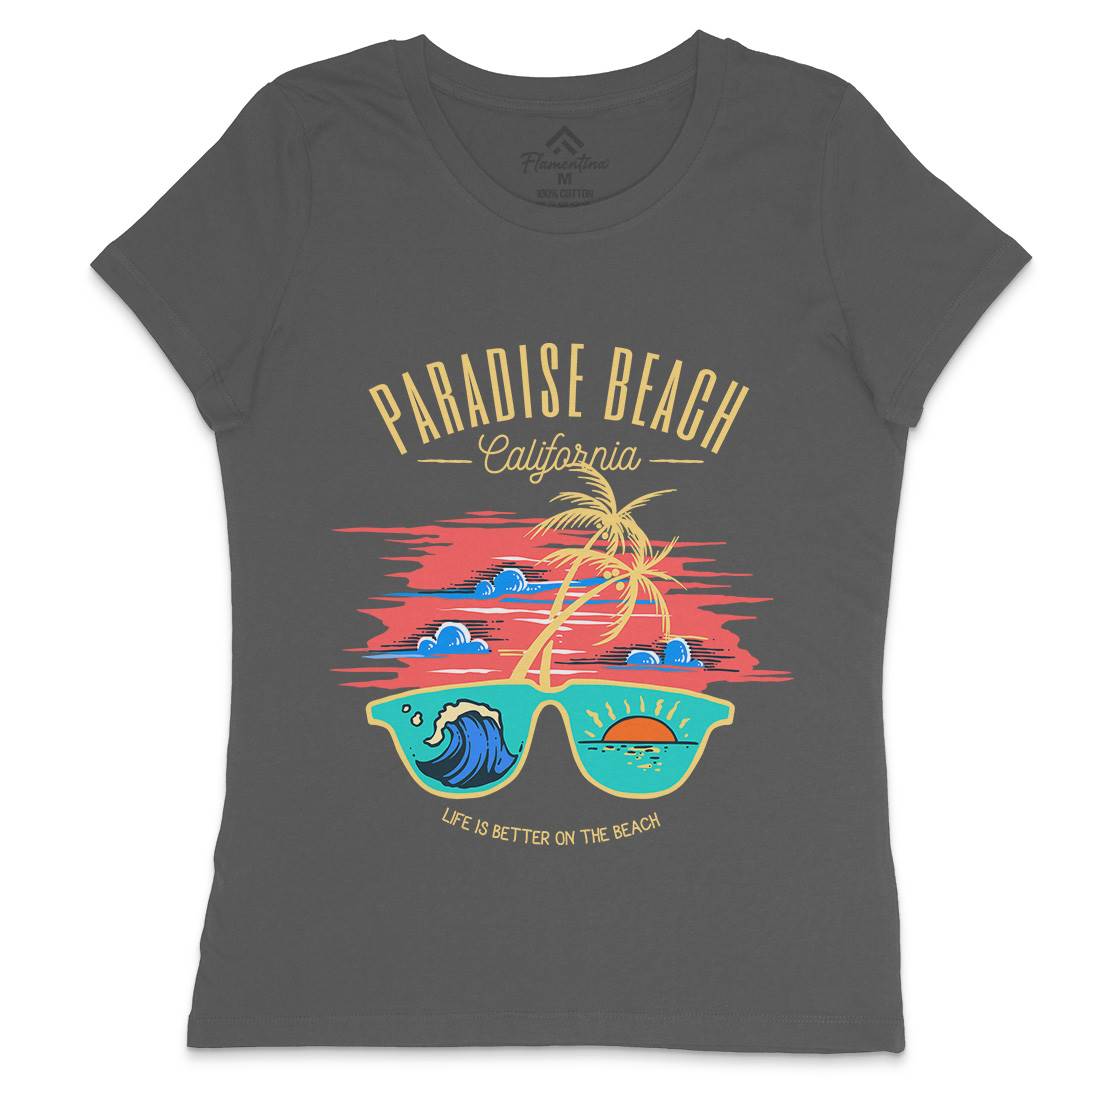 Sunglass Beach Womens Crew Neck T-Shirt Holiday C780